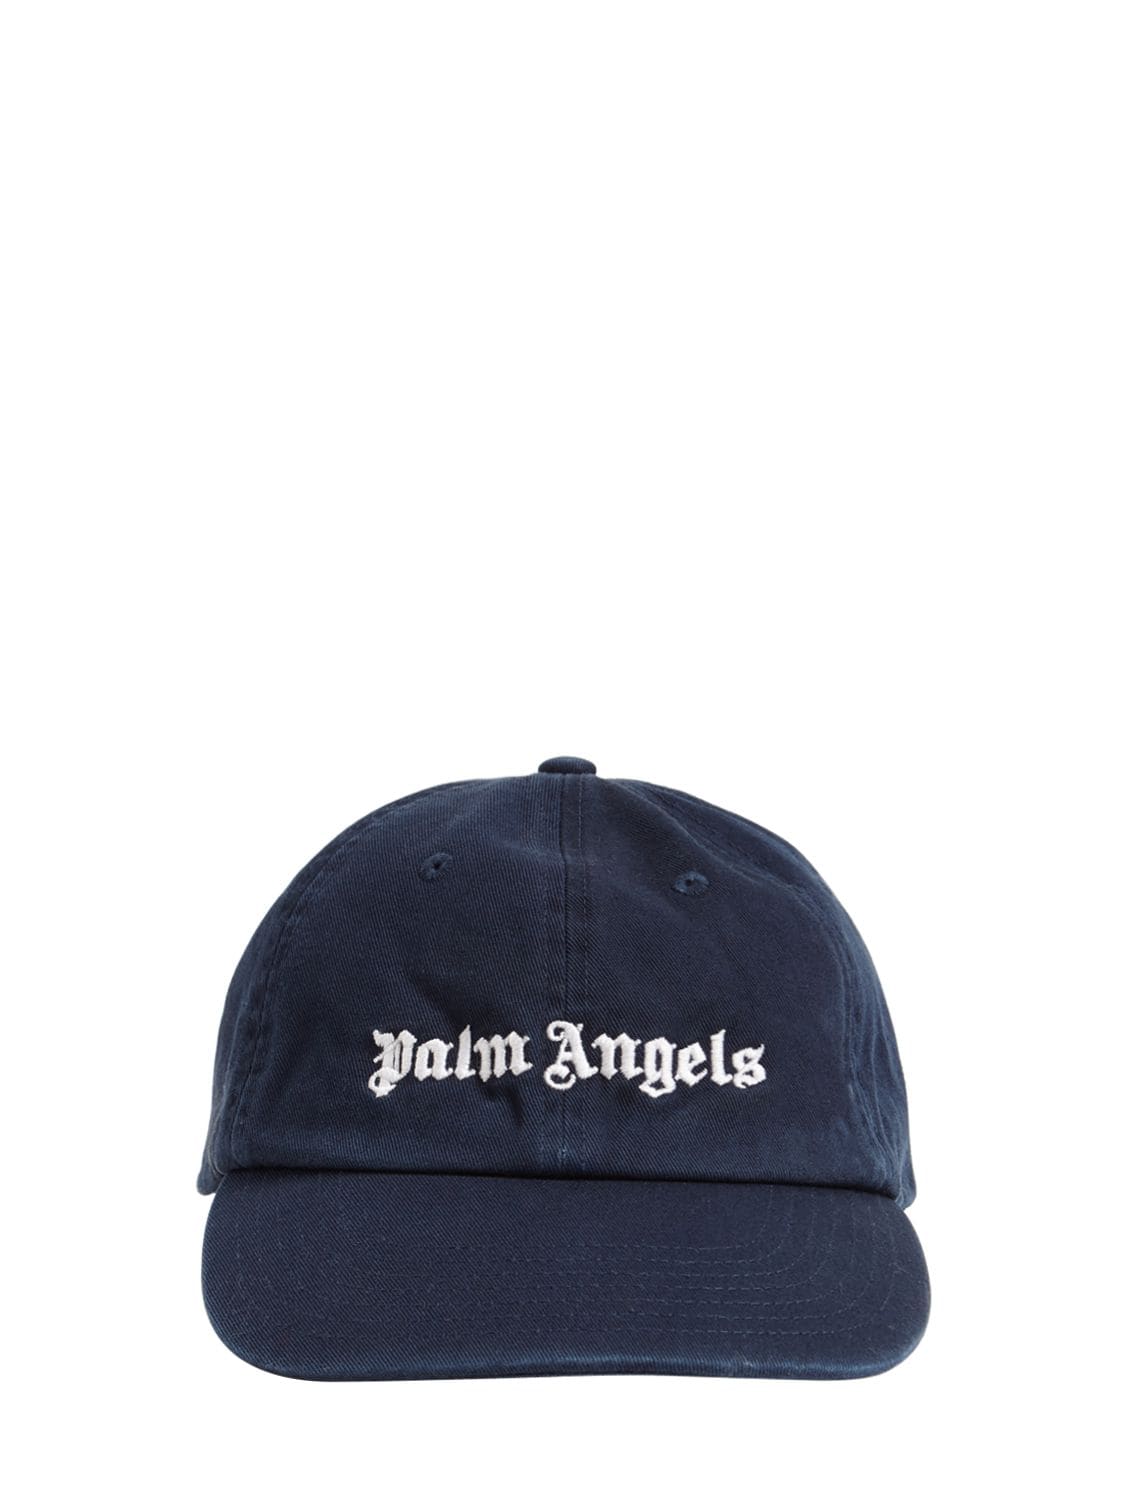 PALM ANGELS Cap for Men | ModeSens